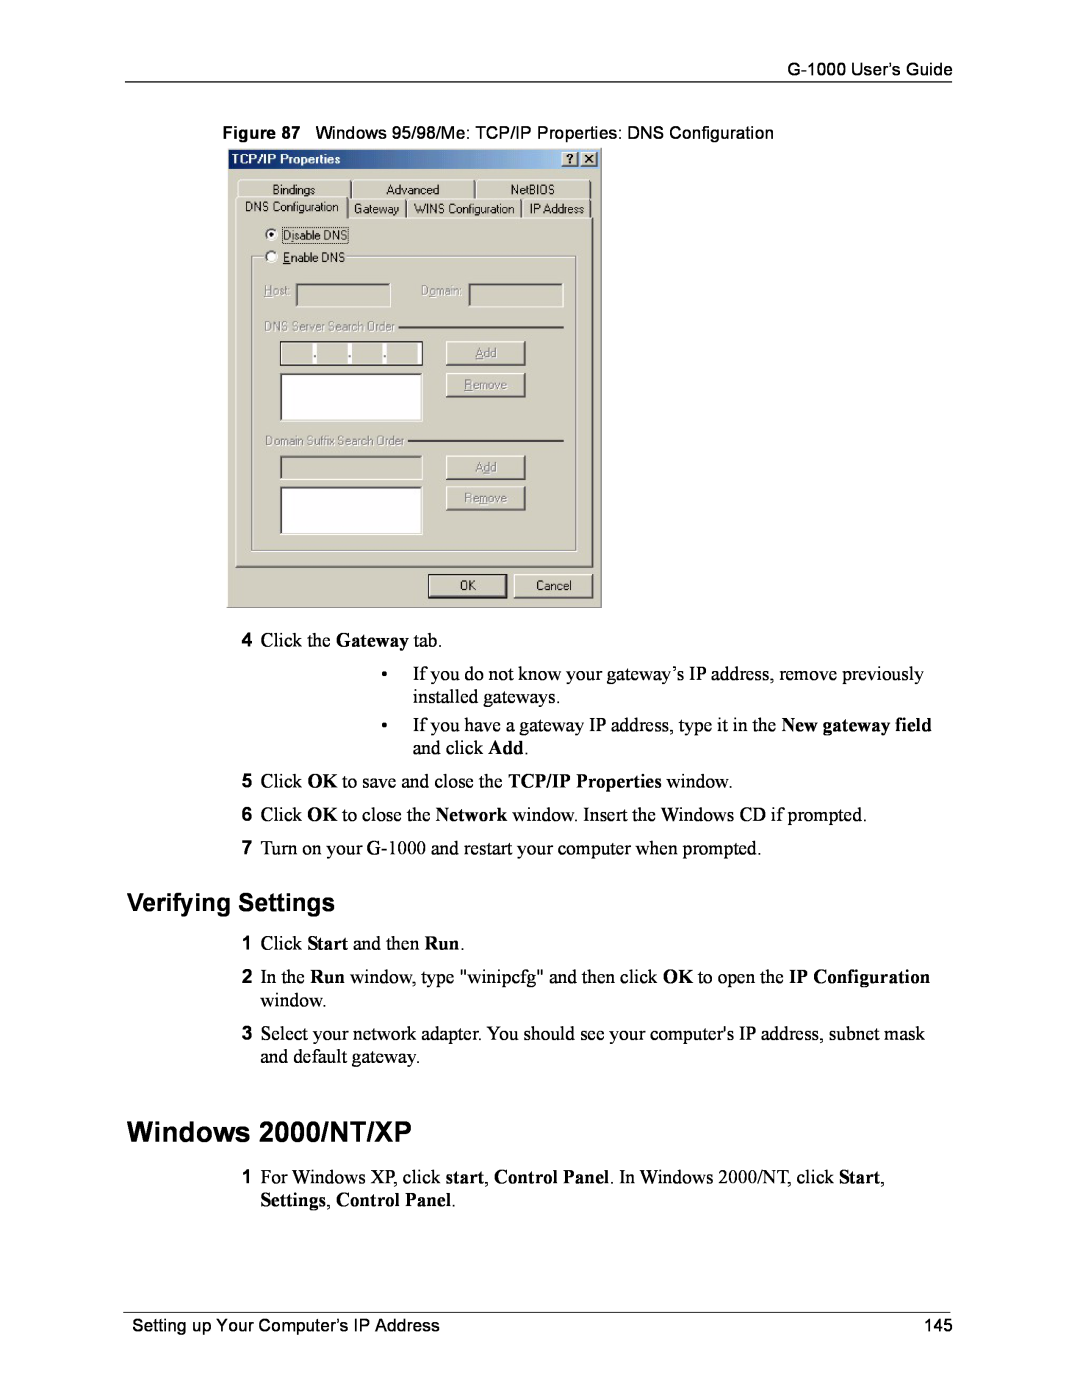 ZyXEL Communications G-1000 manual Windows 2000/NT/XP, Verifying Settings 